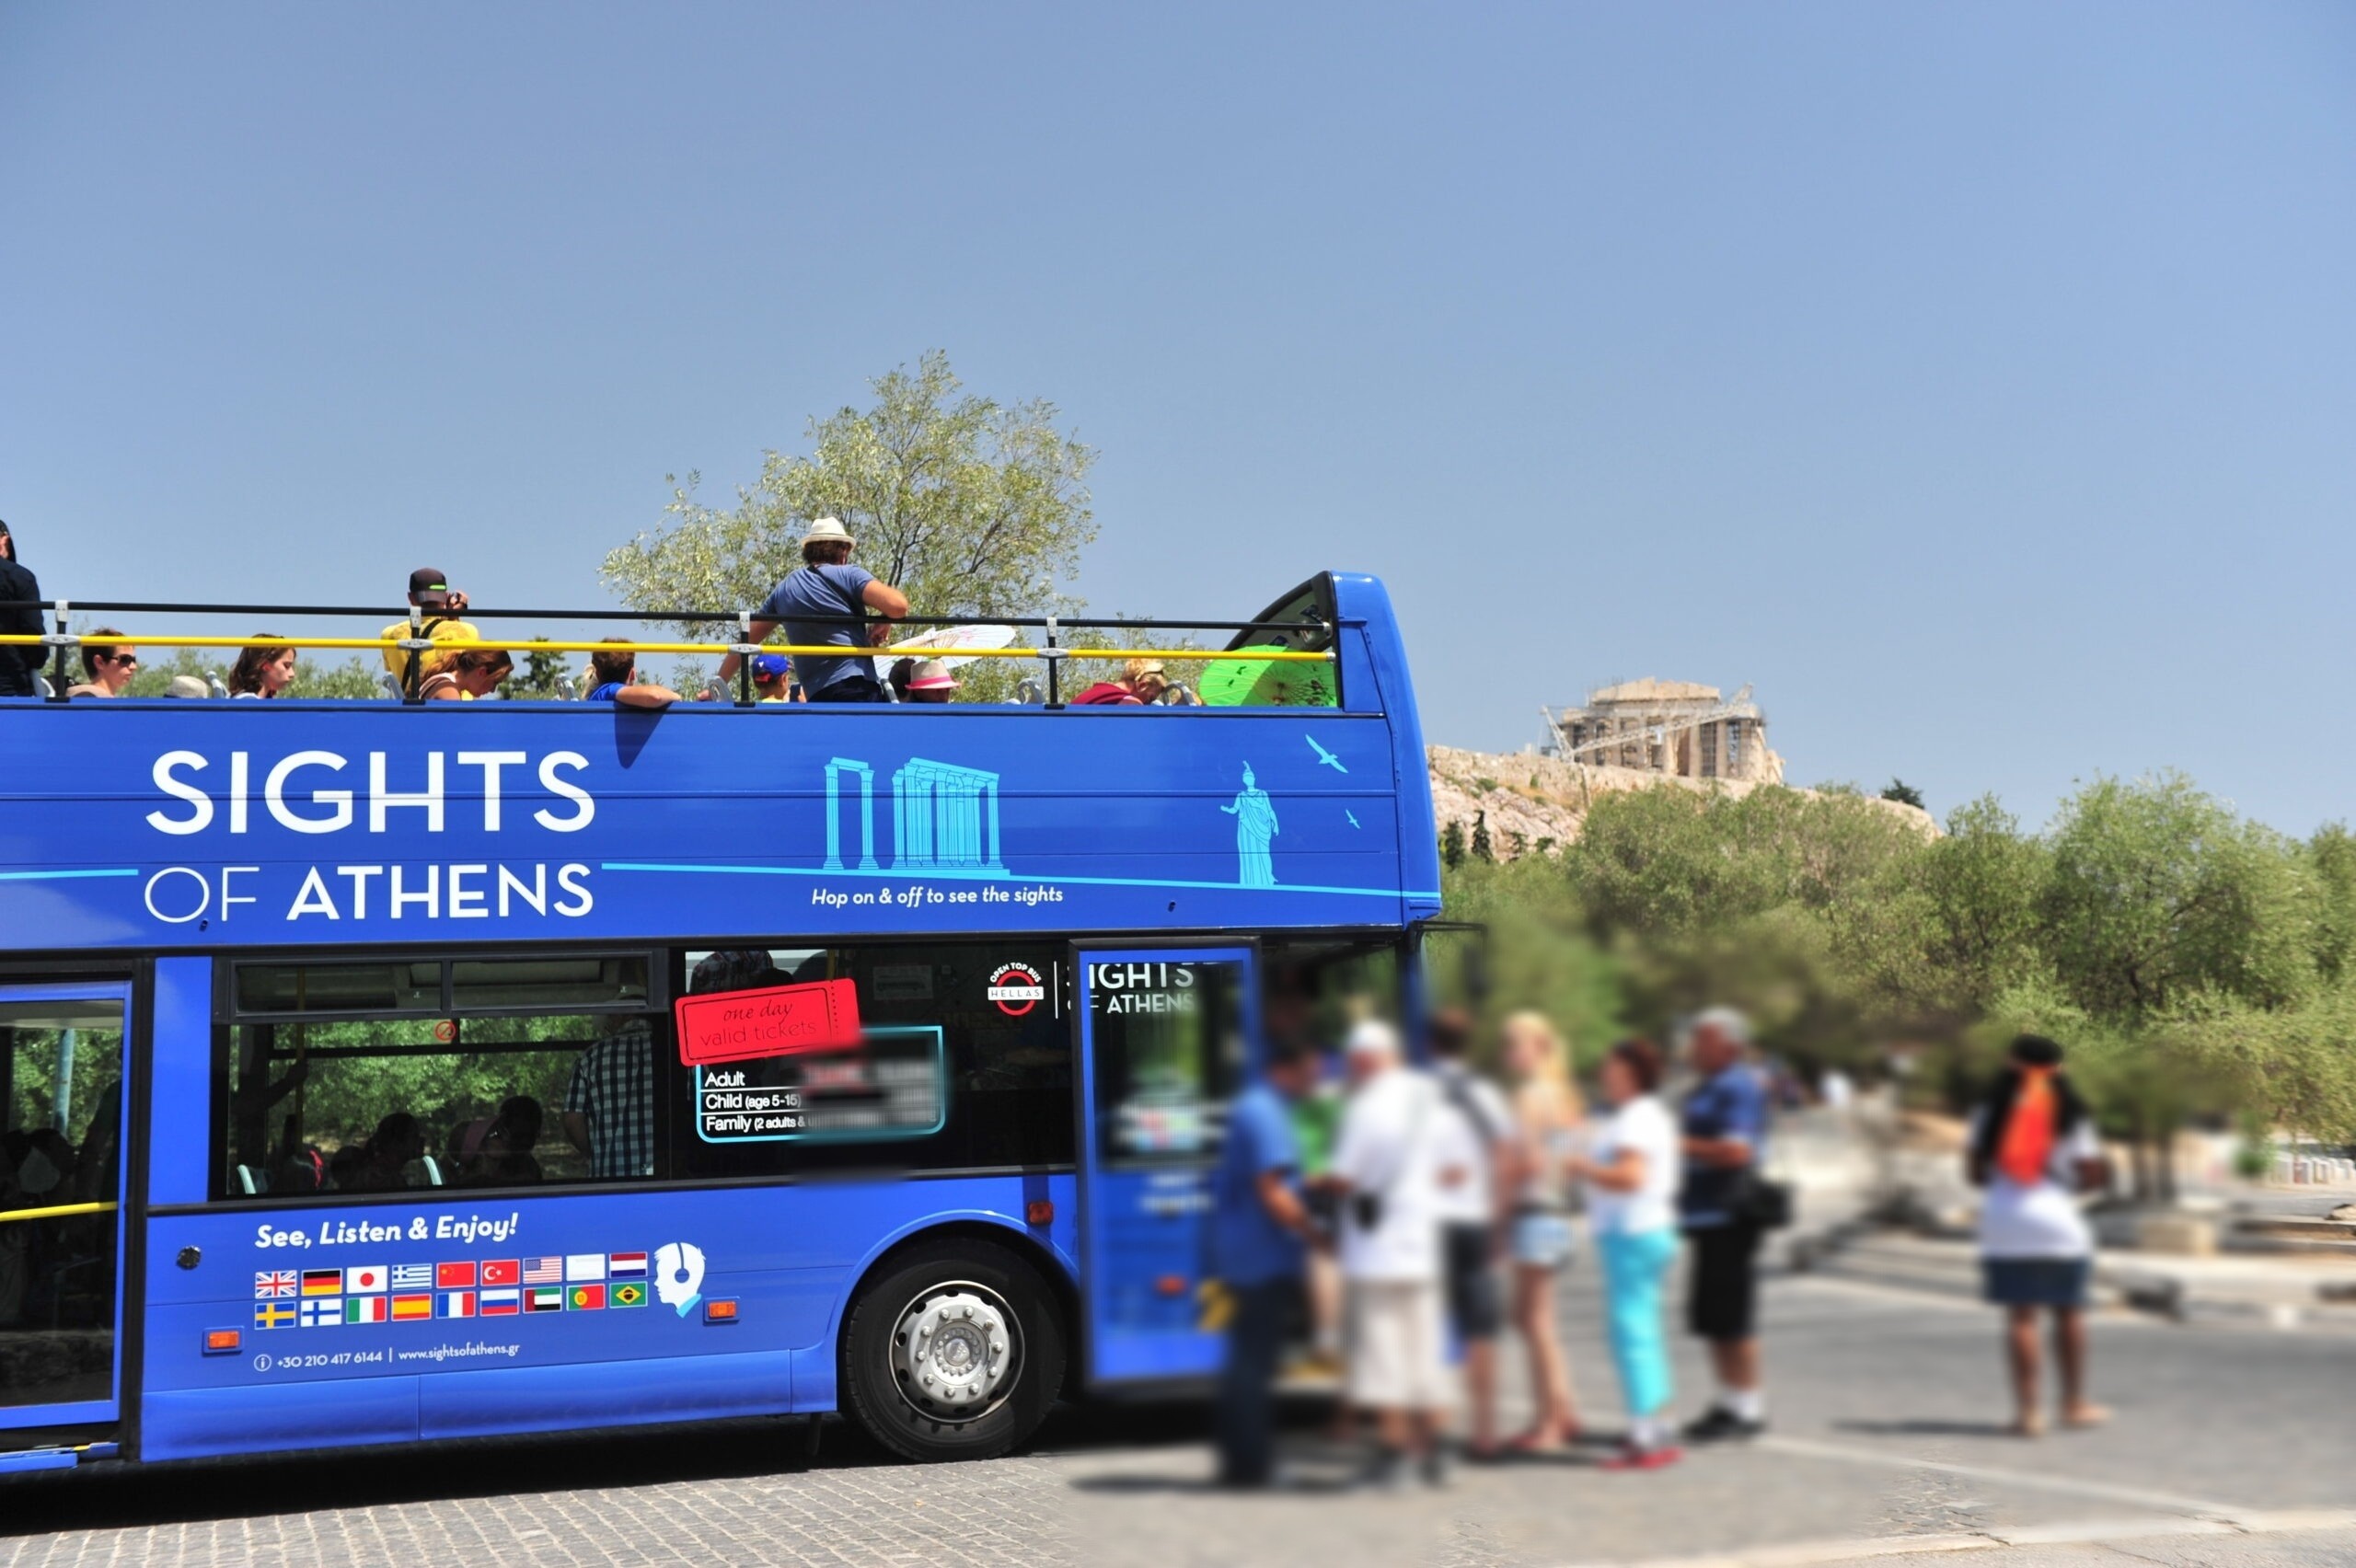 blue bus athens tour